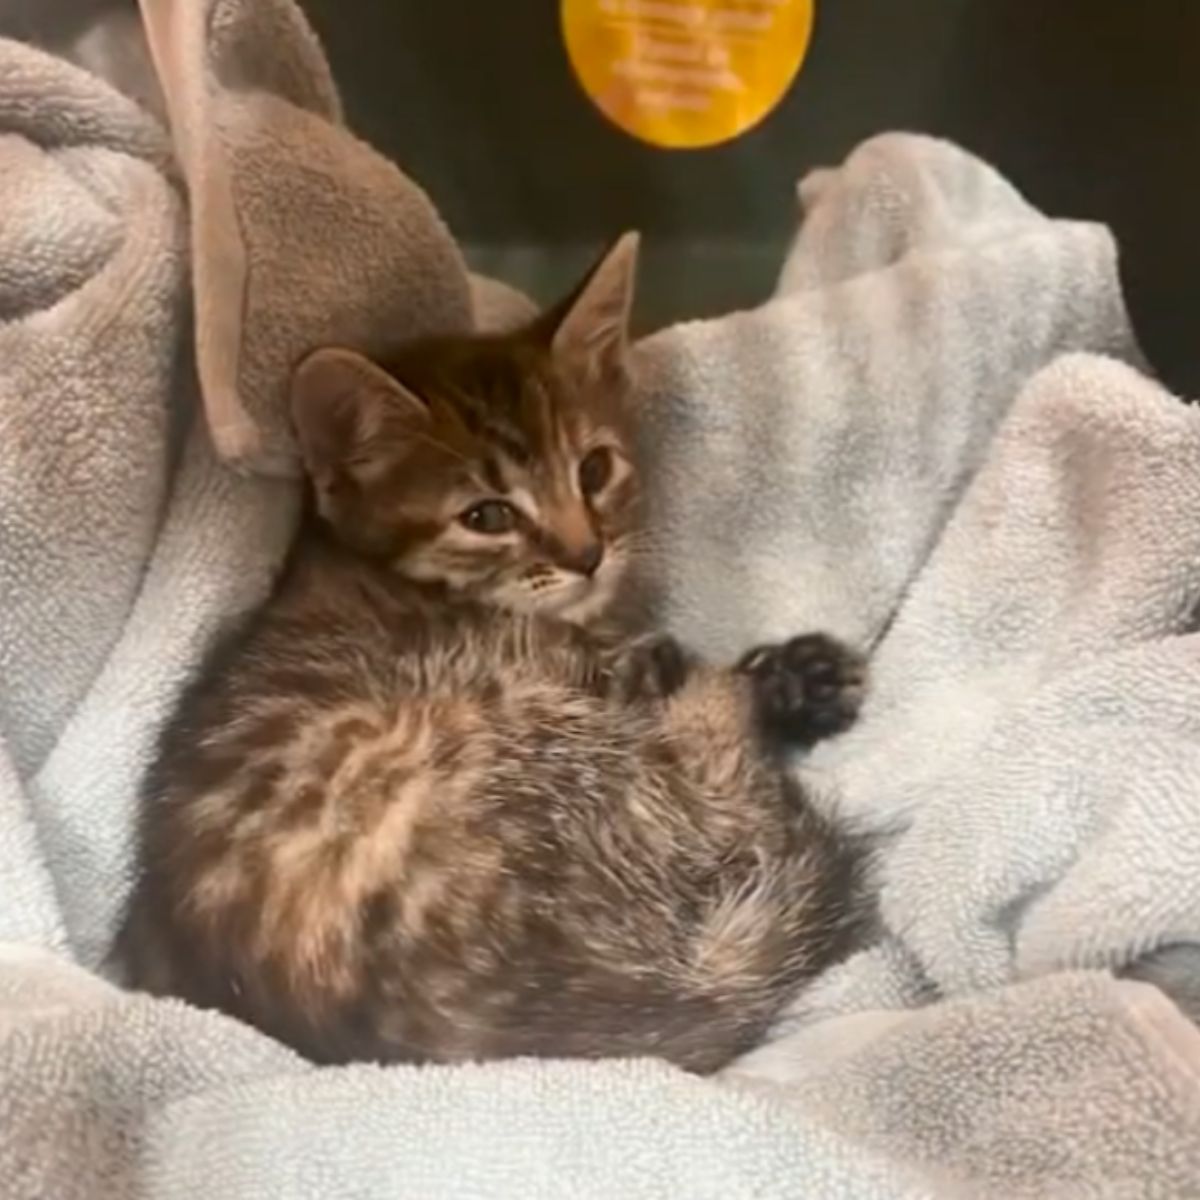 sweet kitten laying in towel